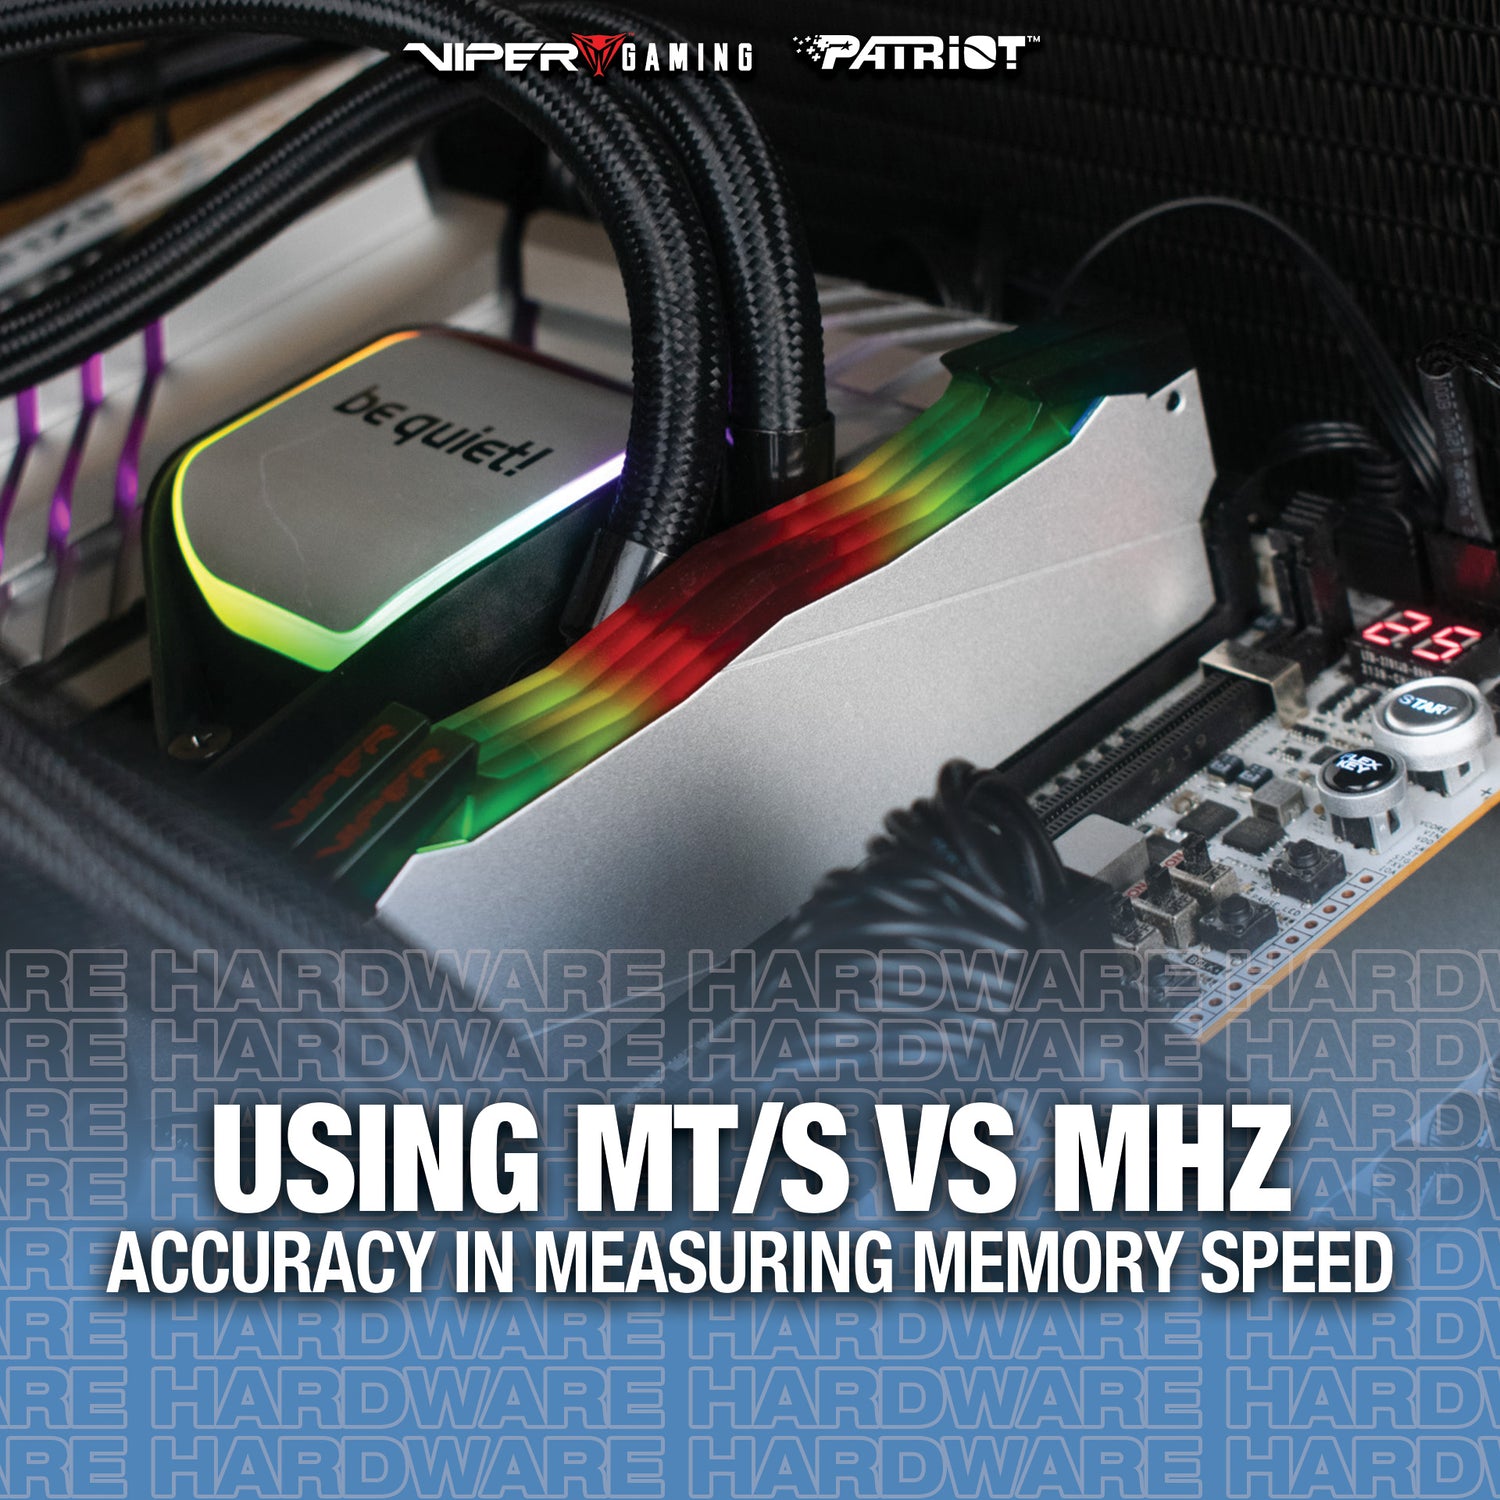 MT/s vs. MHz: Accuracy in Measuring Memory Speed